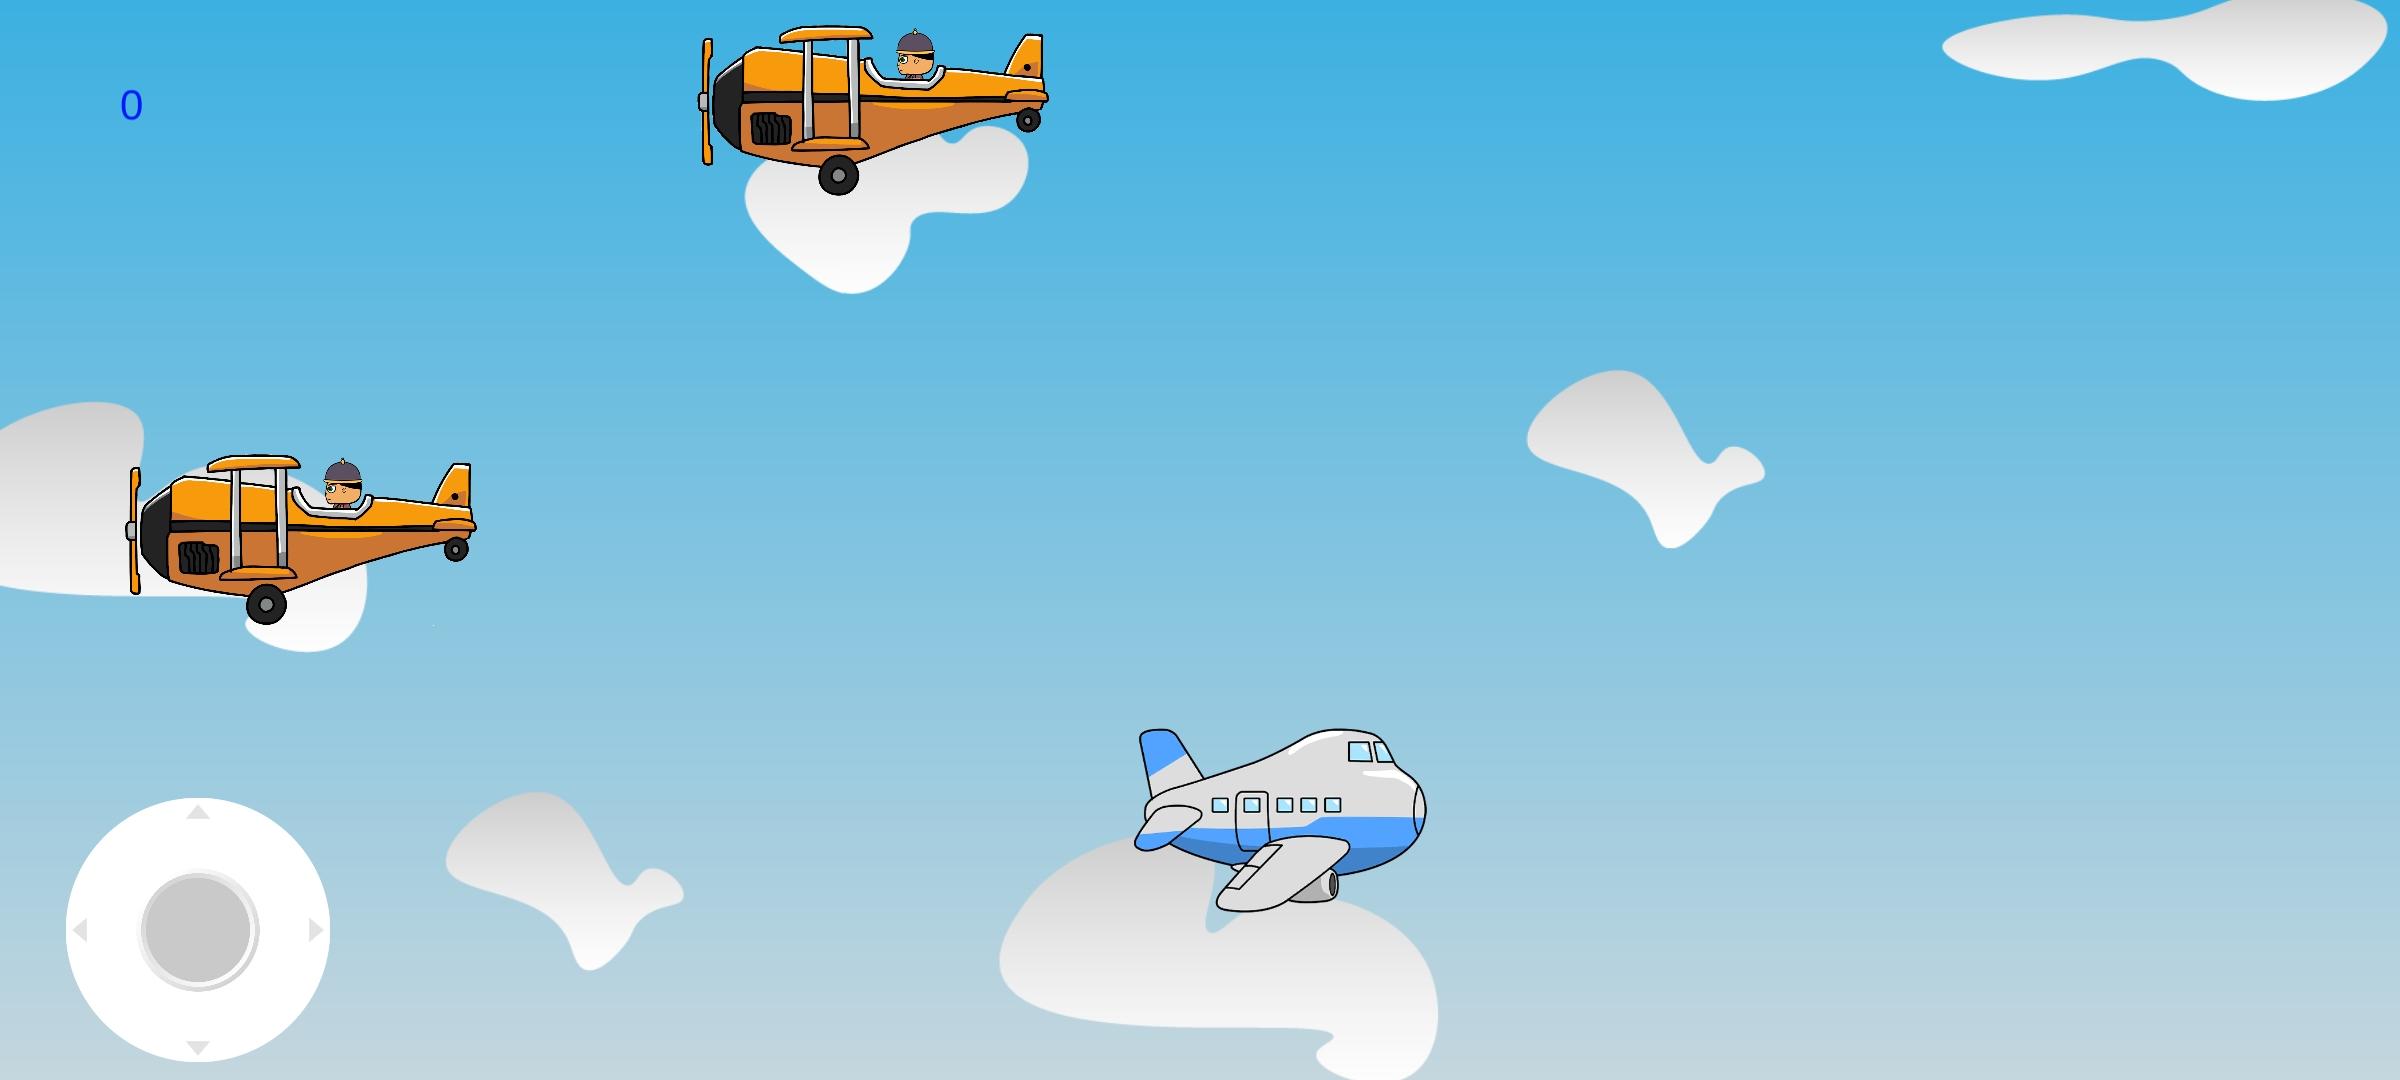 Screenshot 1 of Plan d'avion - Simulateur de vol 3.2